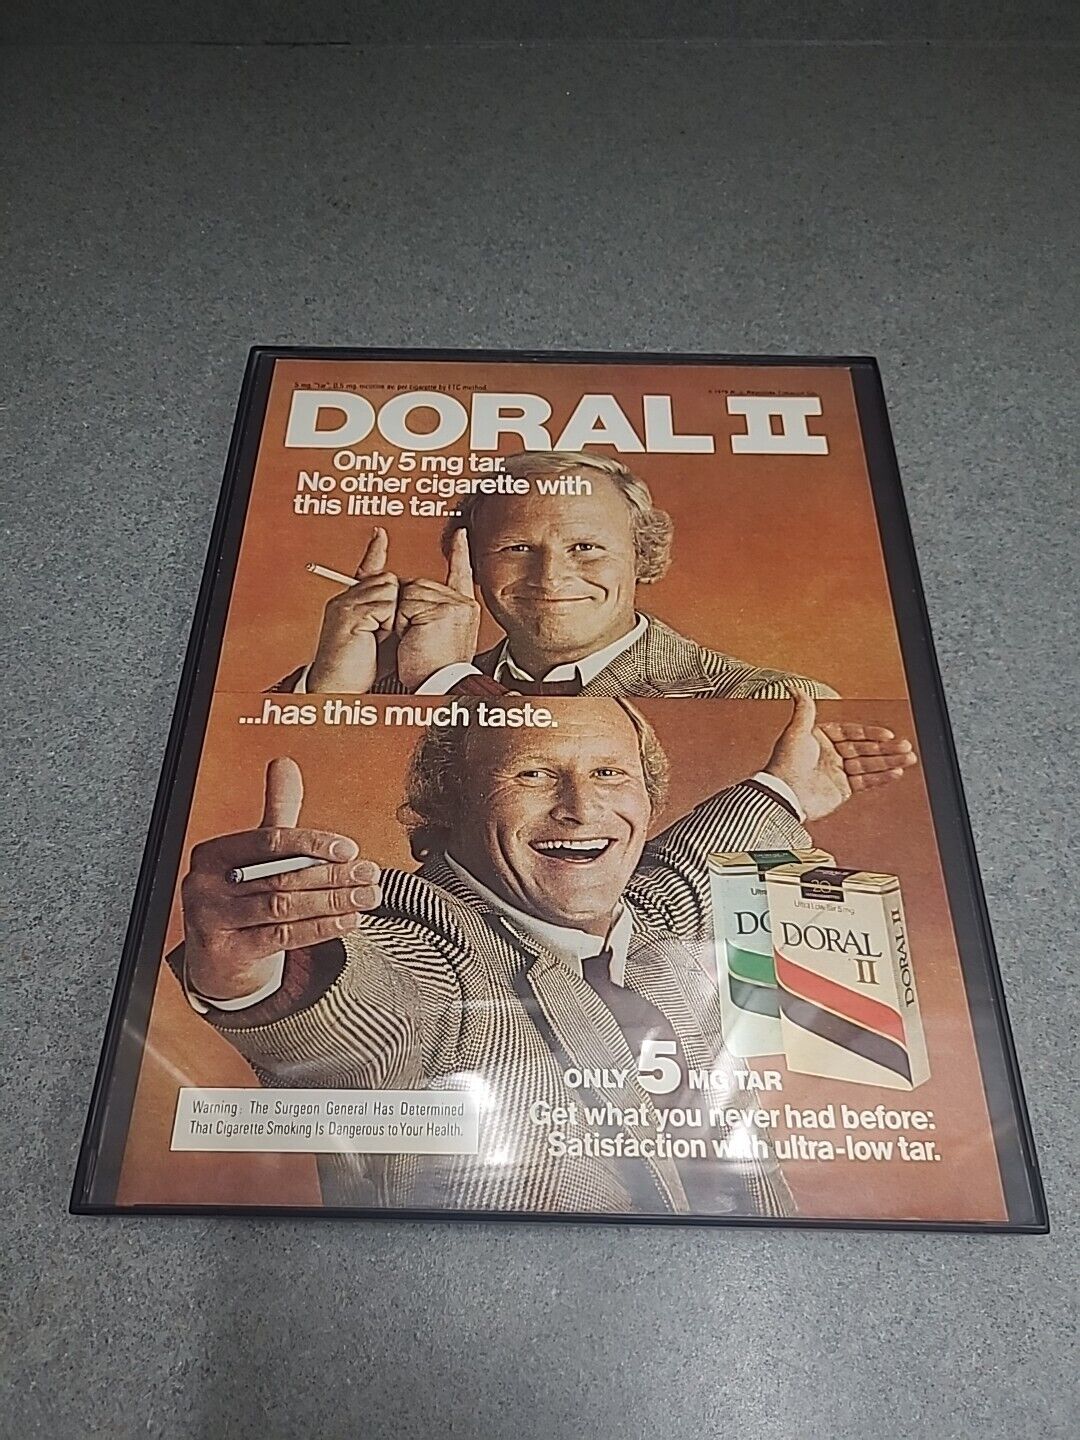 Doral II Cigarettes Framed Print Ad 1979 8.5x11 Wall Decor 